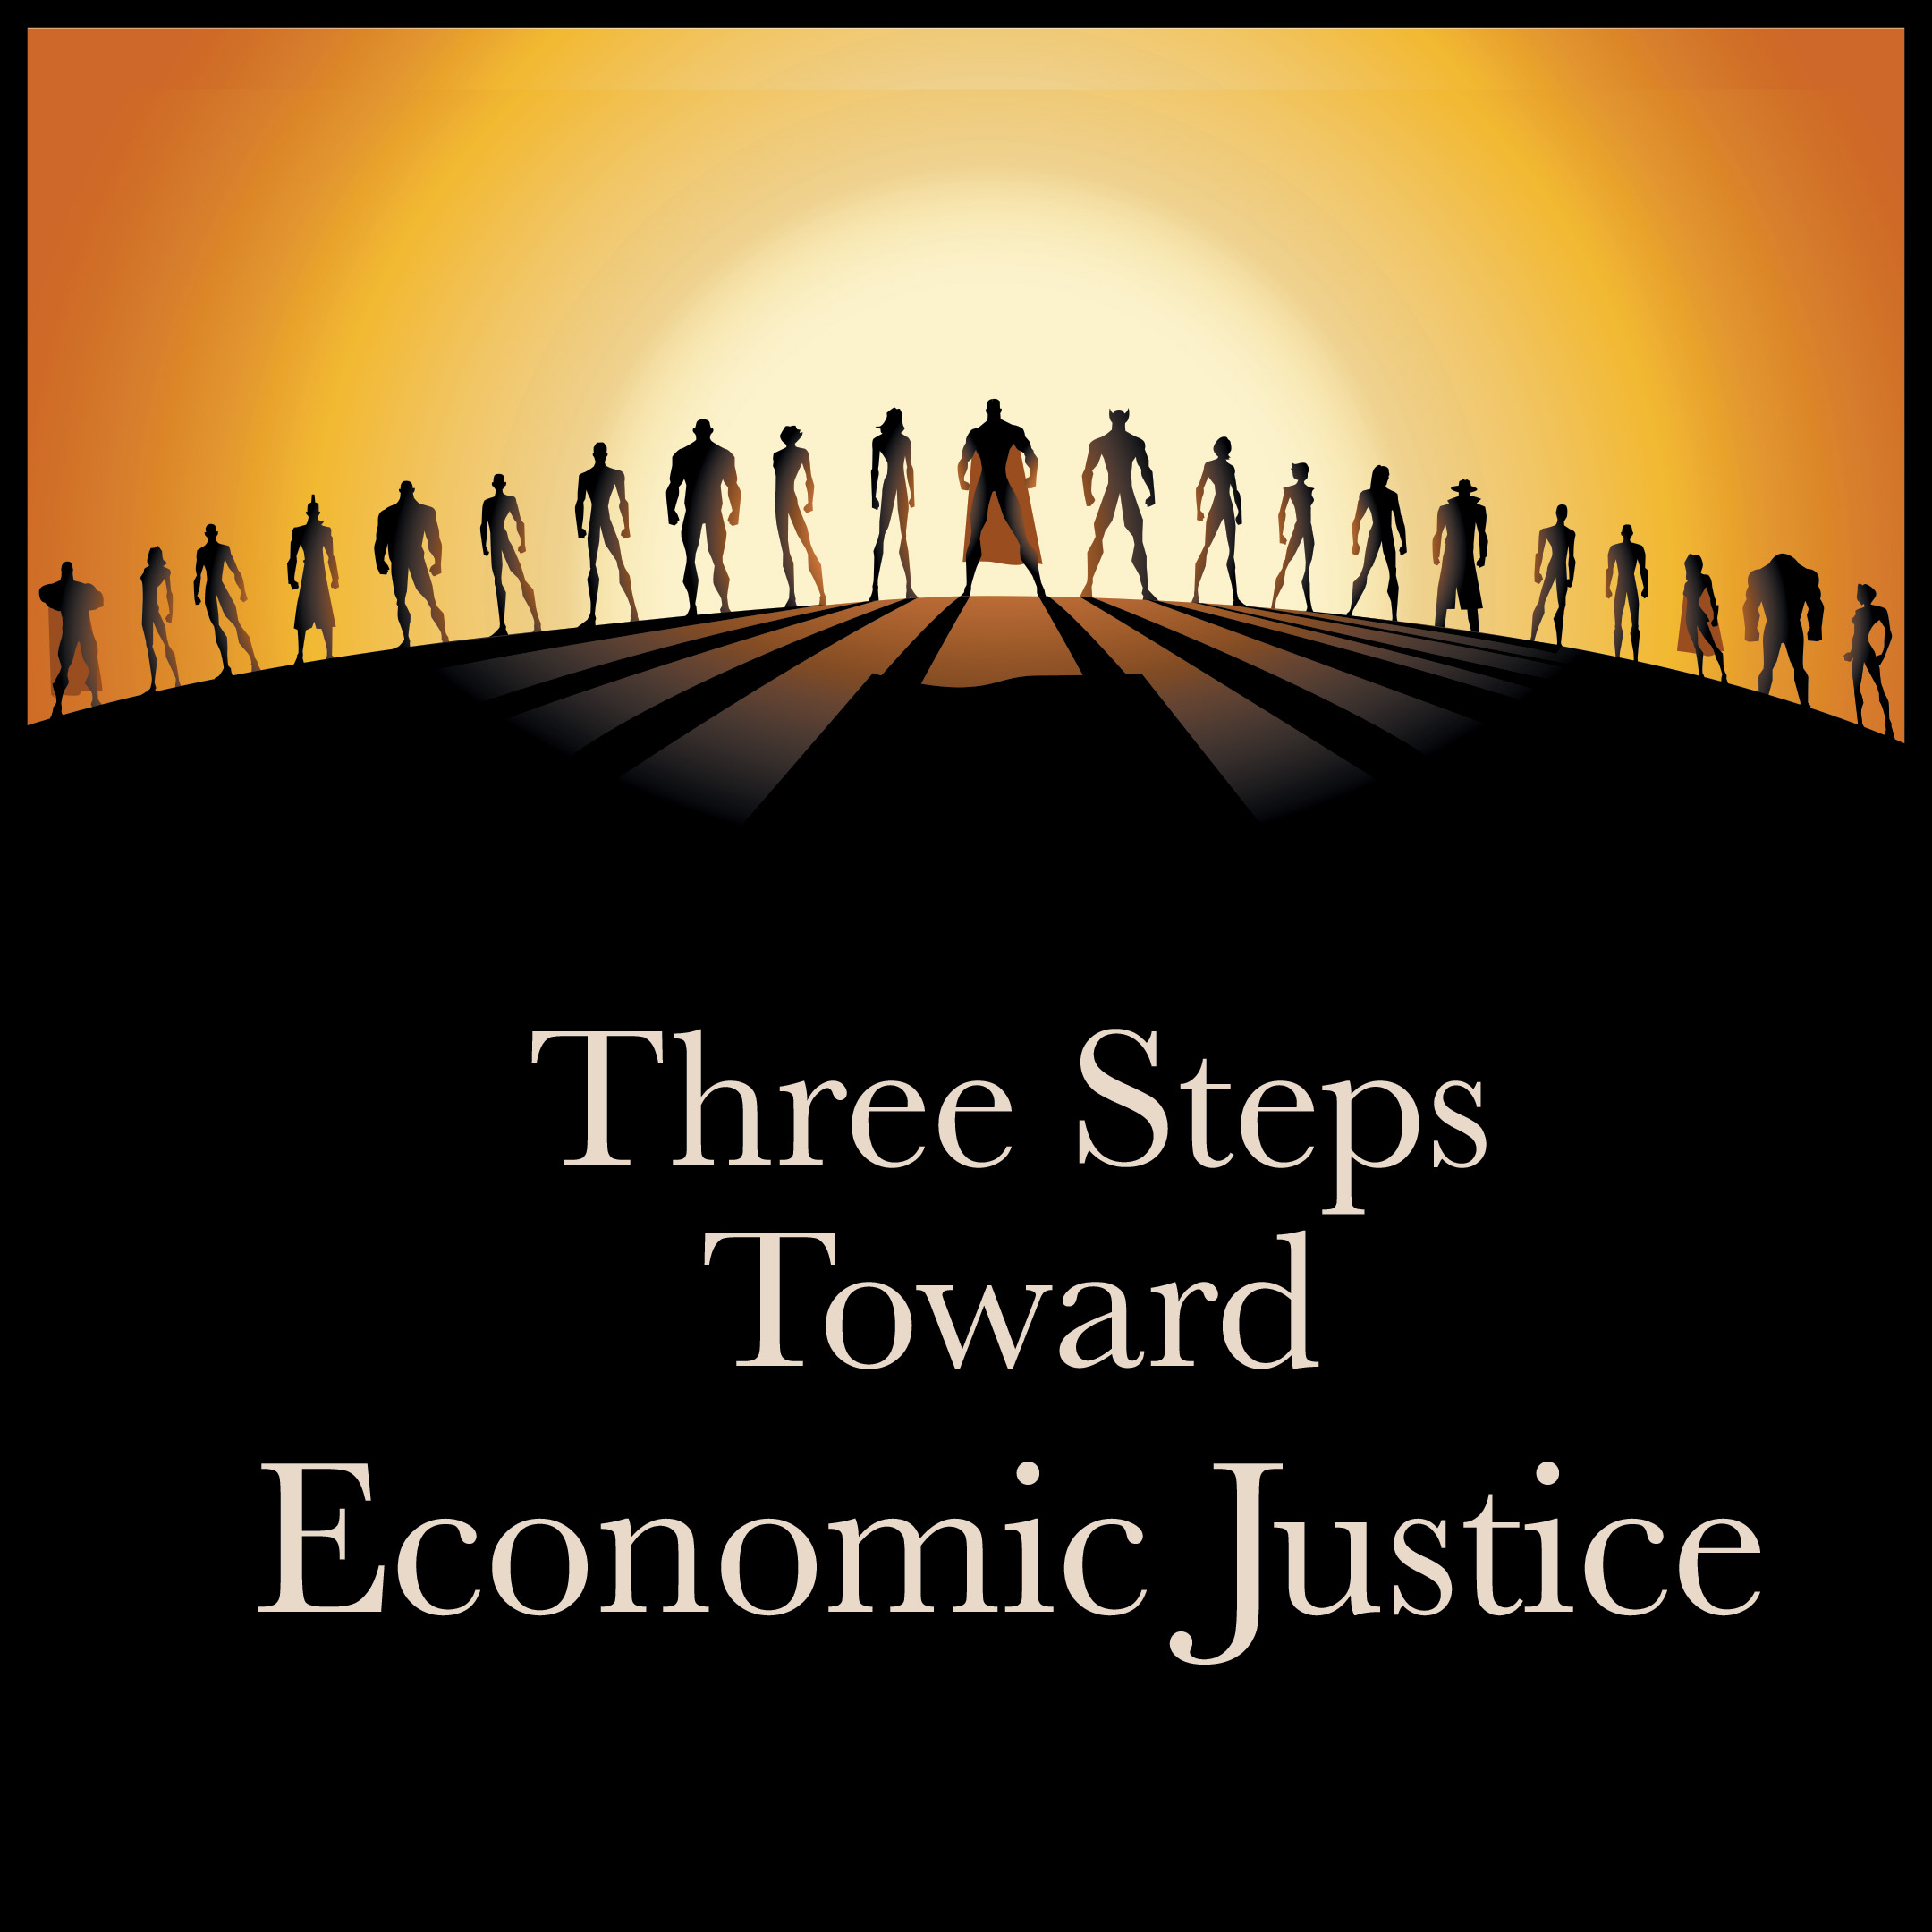 Three steps toward economic justice